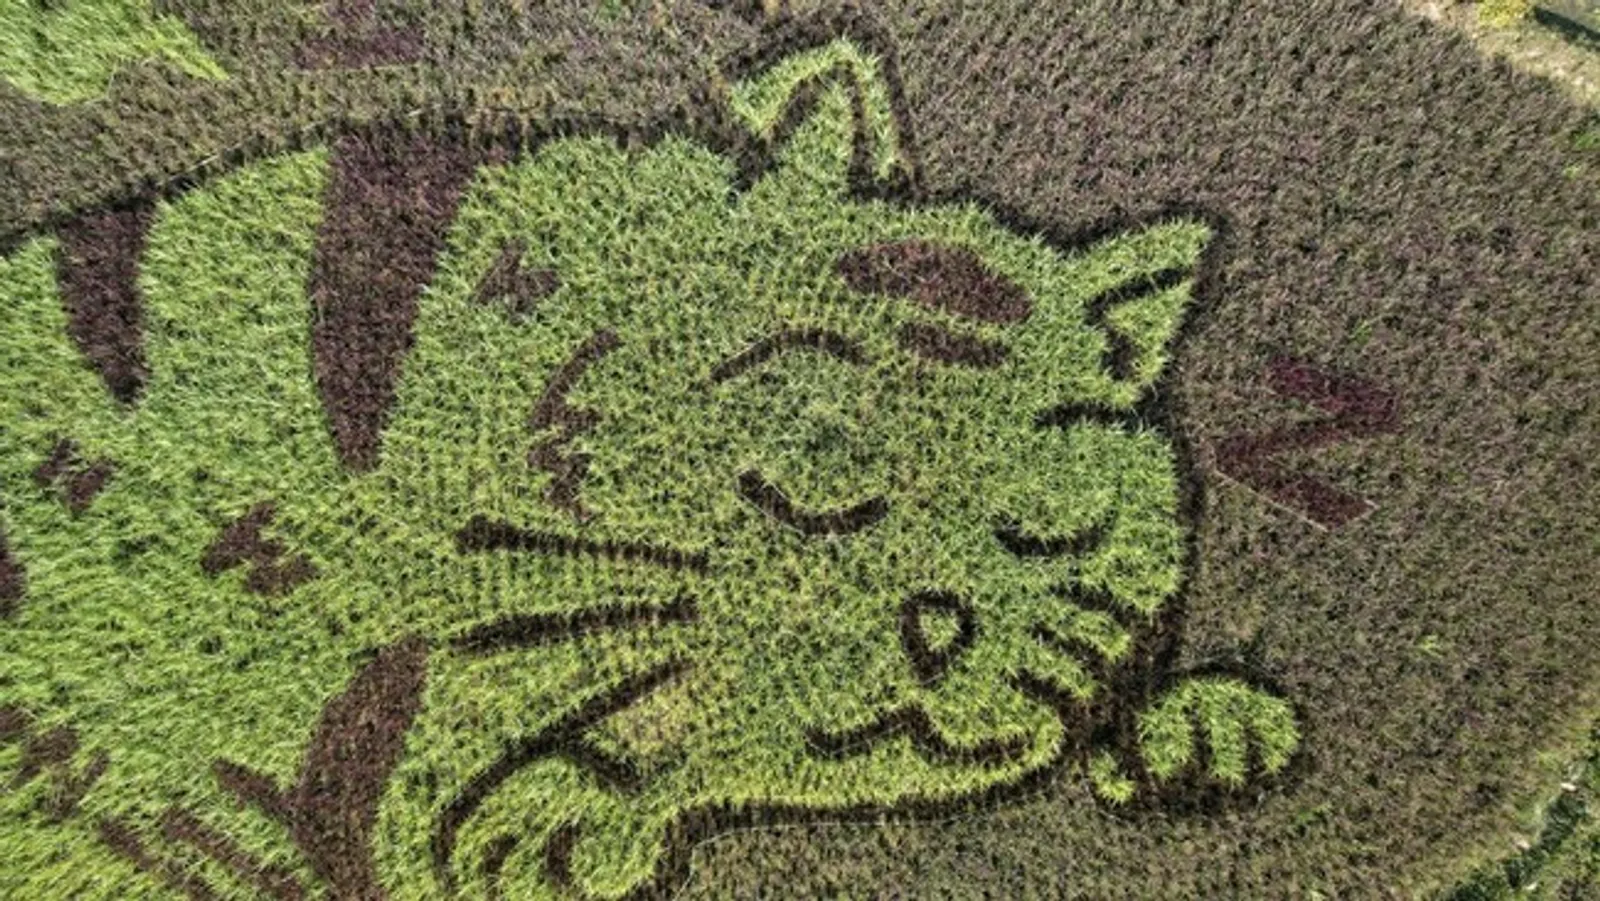 Di Thailand, Ada Lukisan Kucing Raksasa di Atas Ladang Sawah